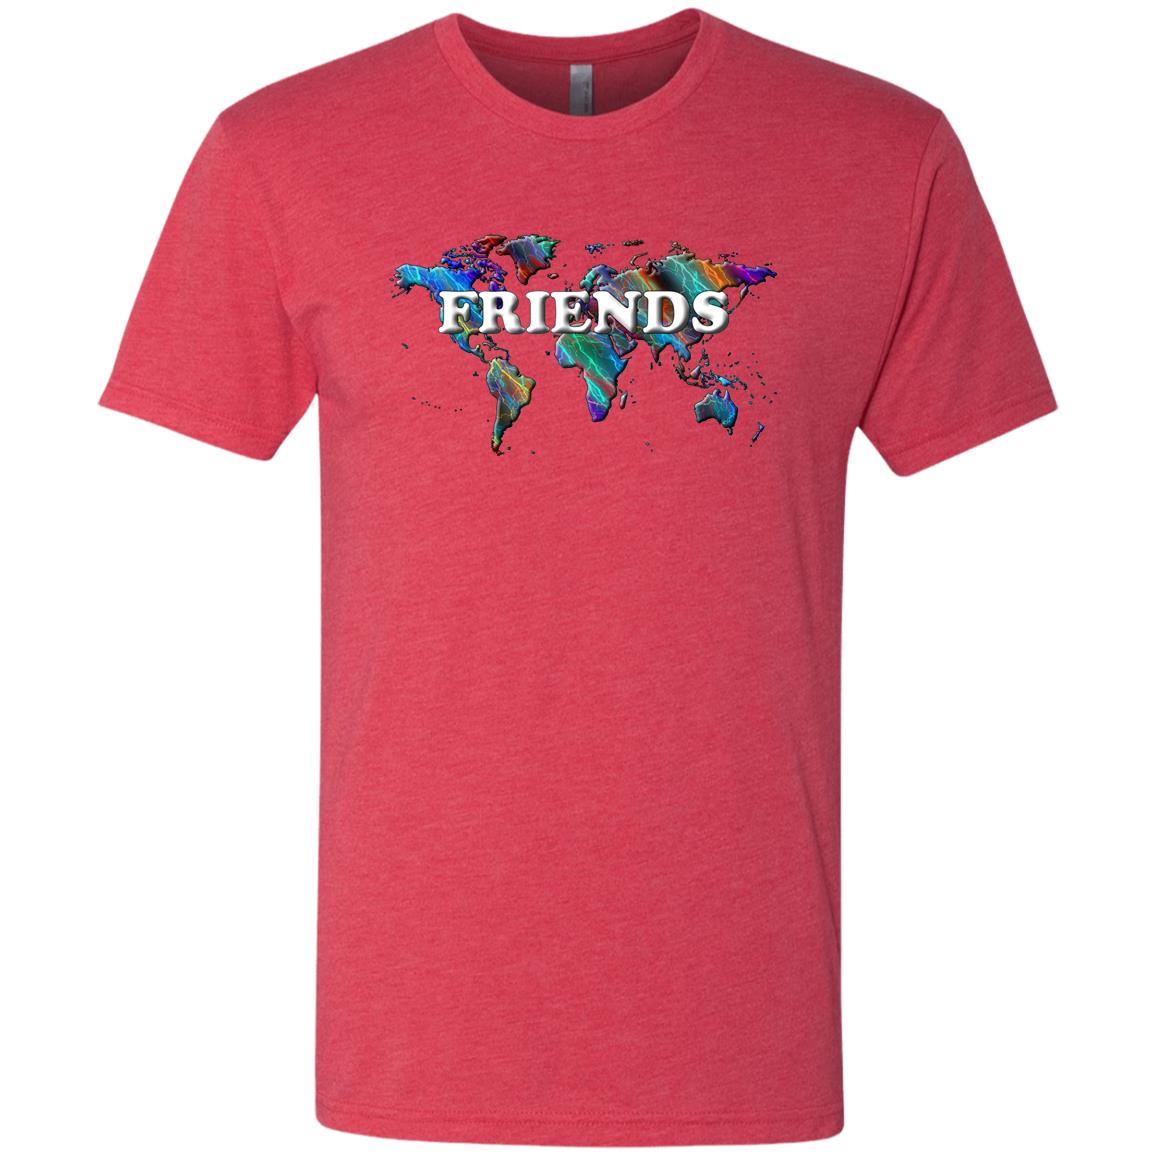 Friends Statement T-Shirt